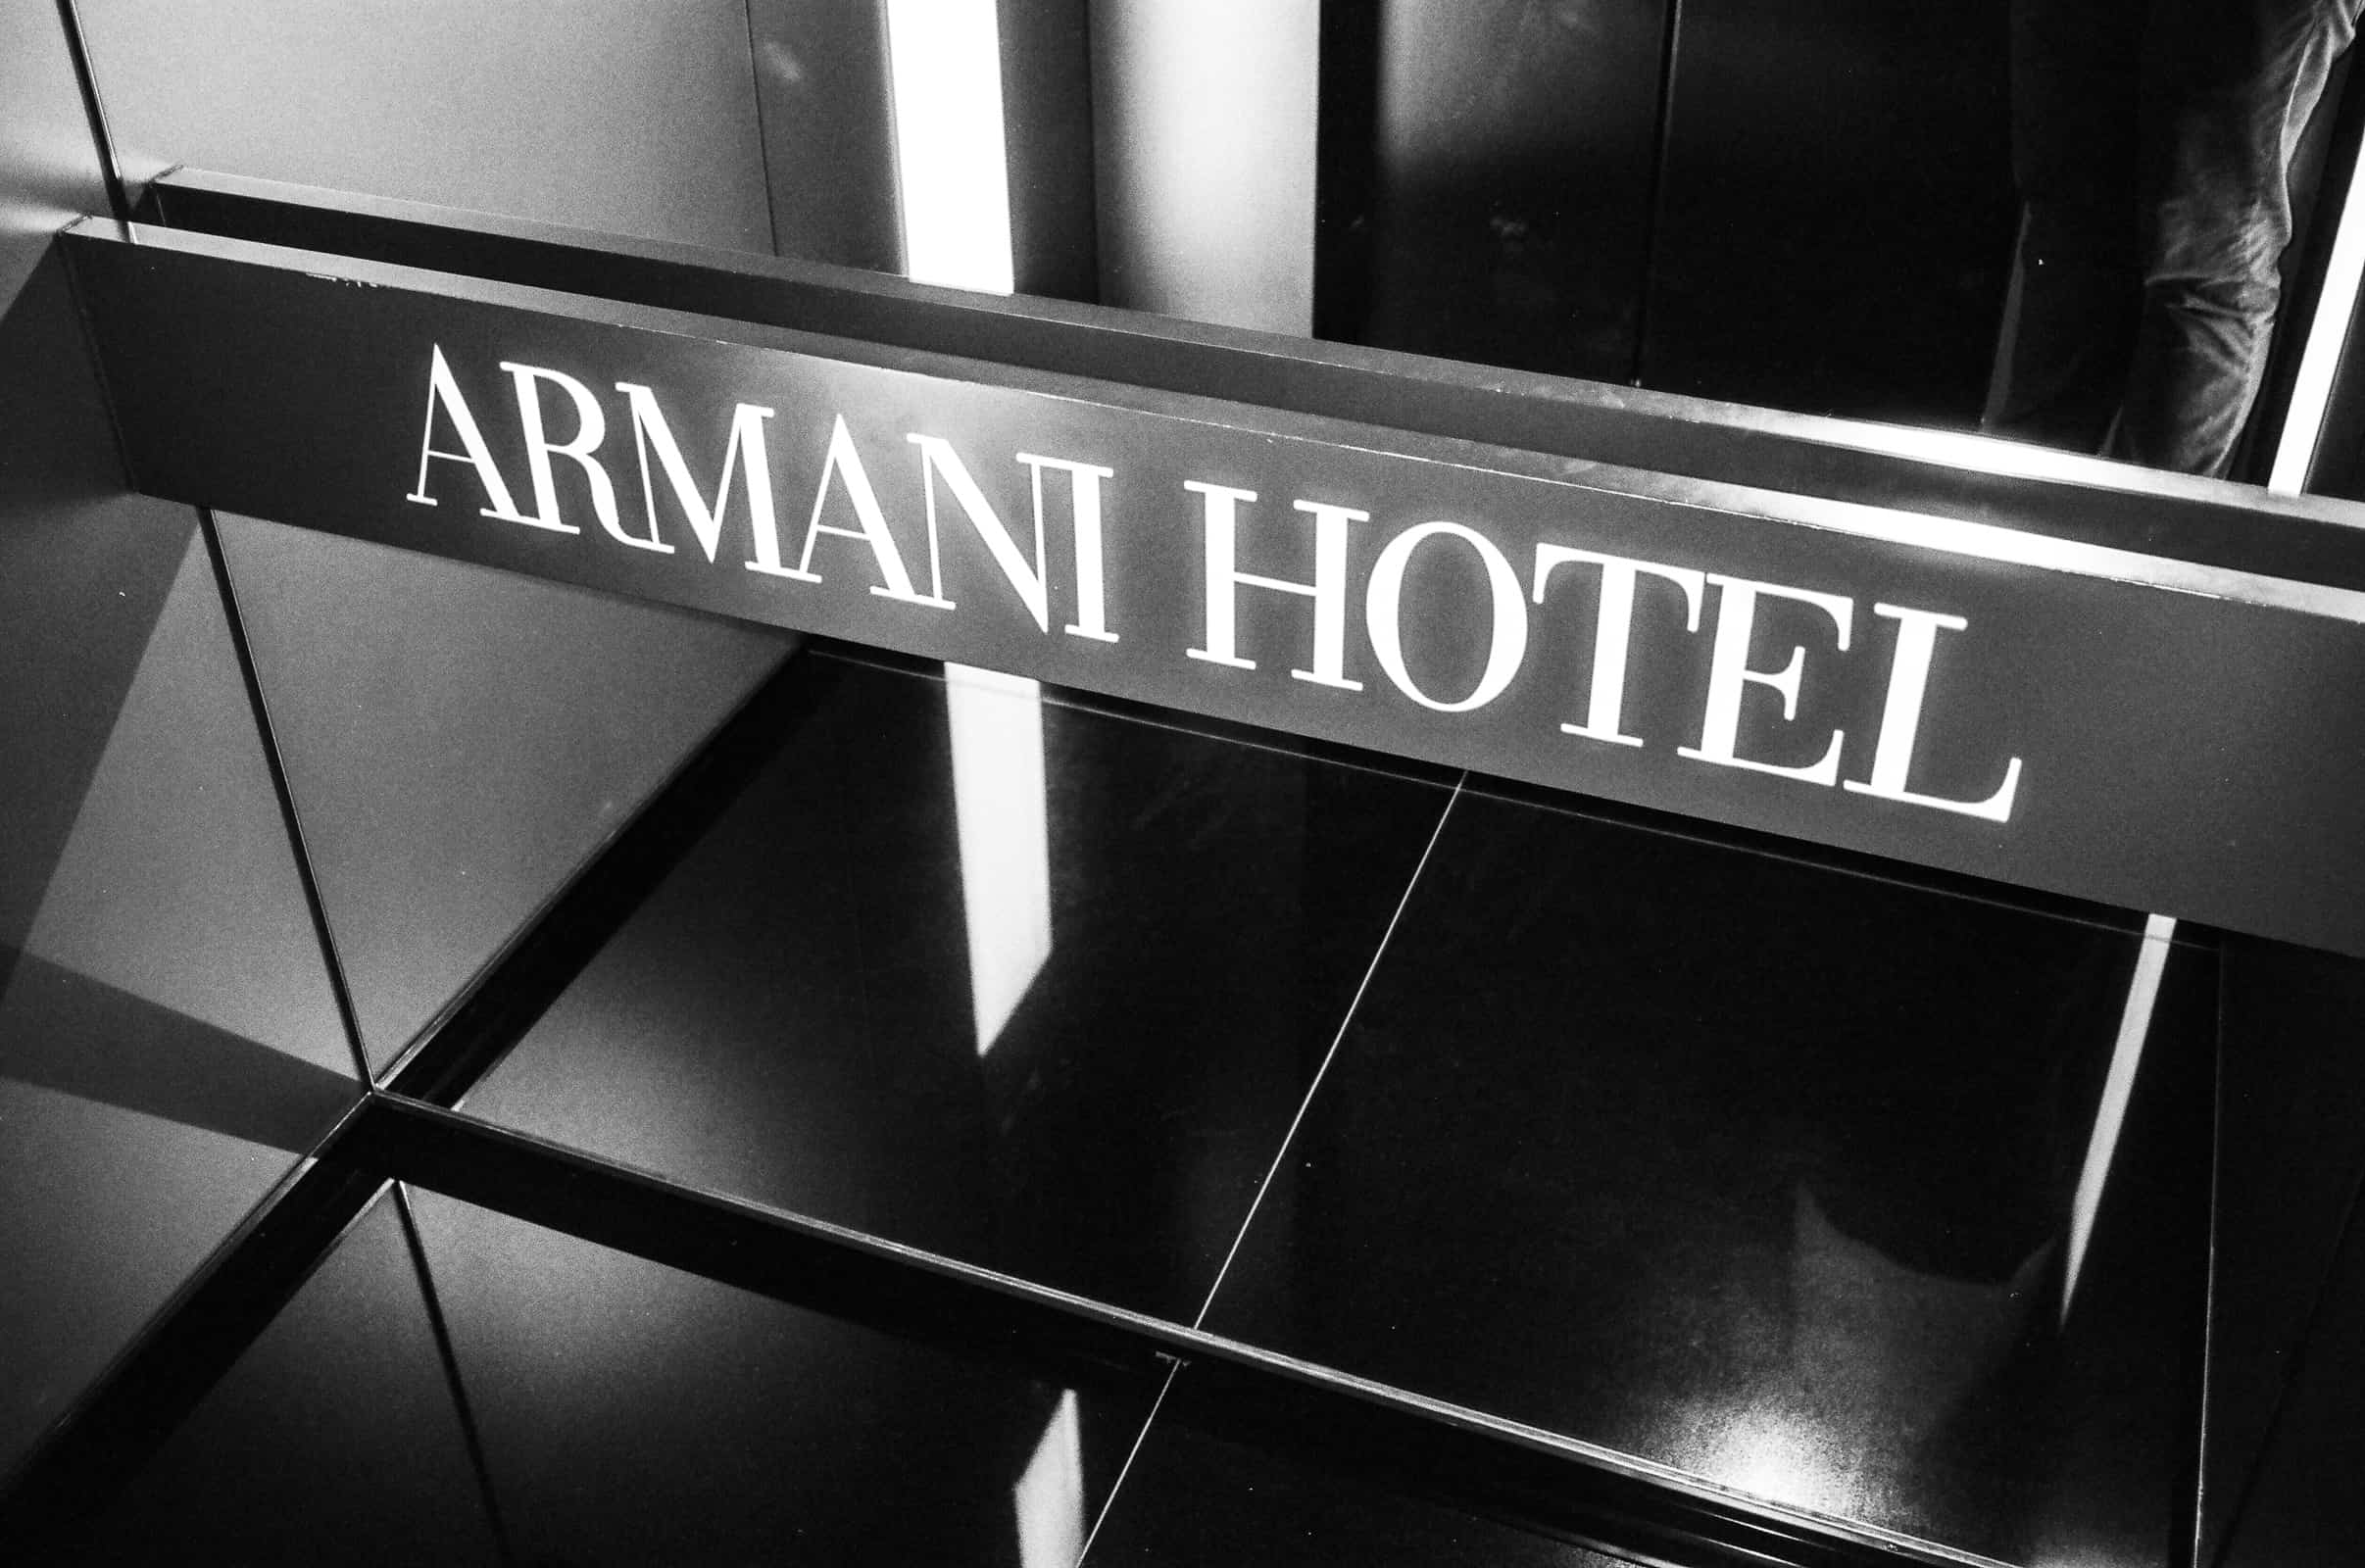 Armani Hotel sign